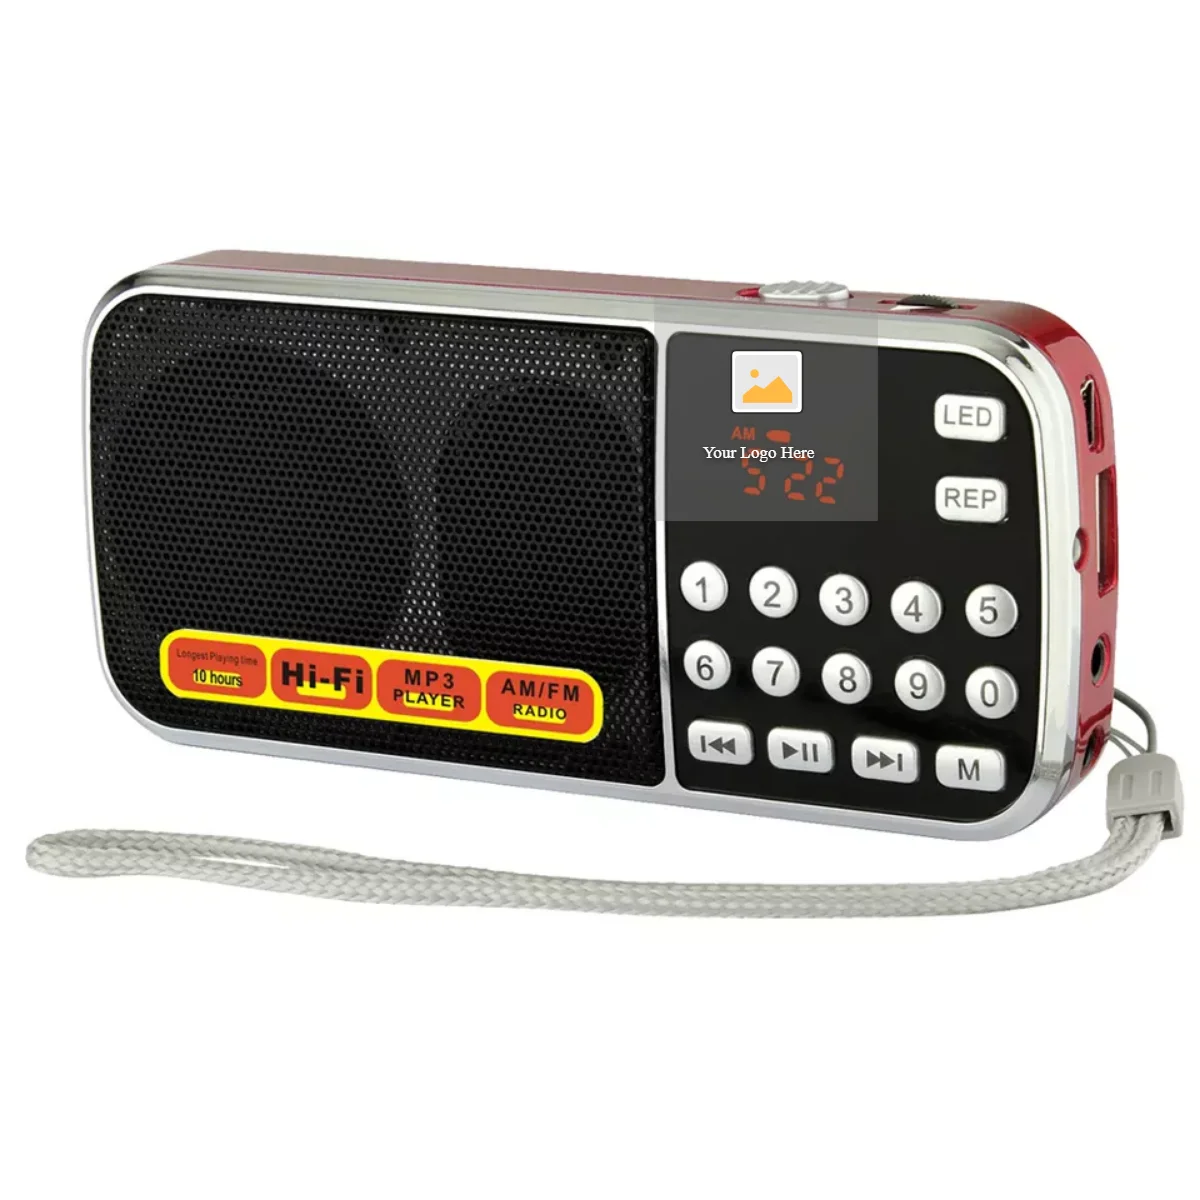 Dewant L-088am Am Fm Pocket Radio,Punjabi Gurbani Radio Usb And Memory Cards Slot - Buy Gurbani Radio,Radio With Usb And Memory Cards,Punjabi Radio Product on Alibaba.com